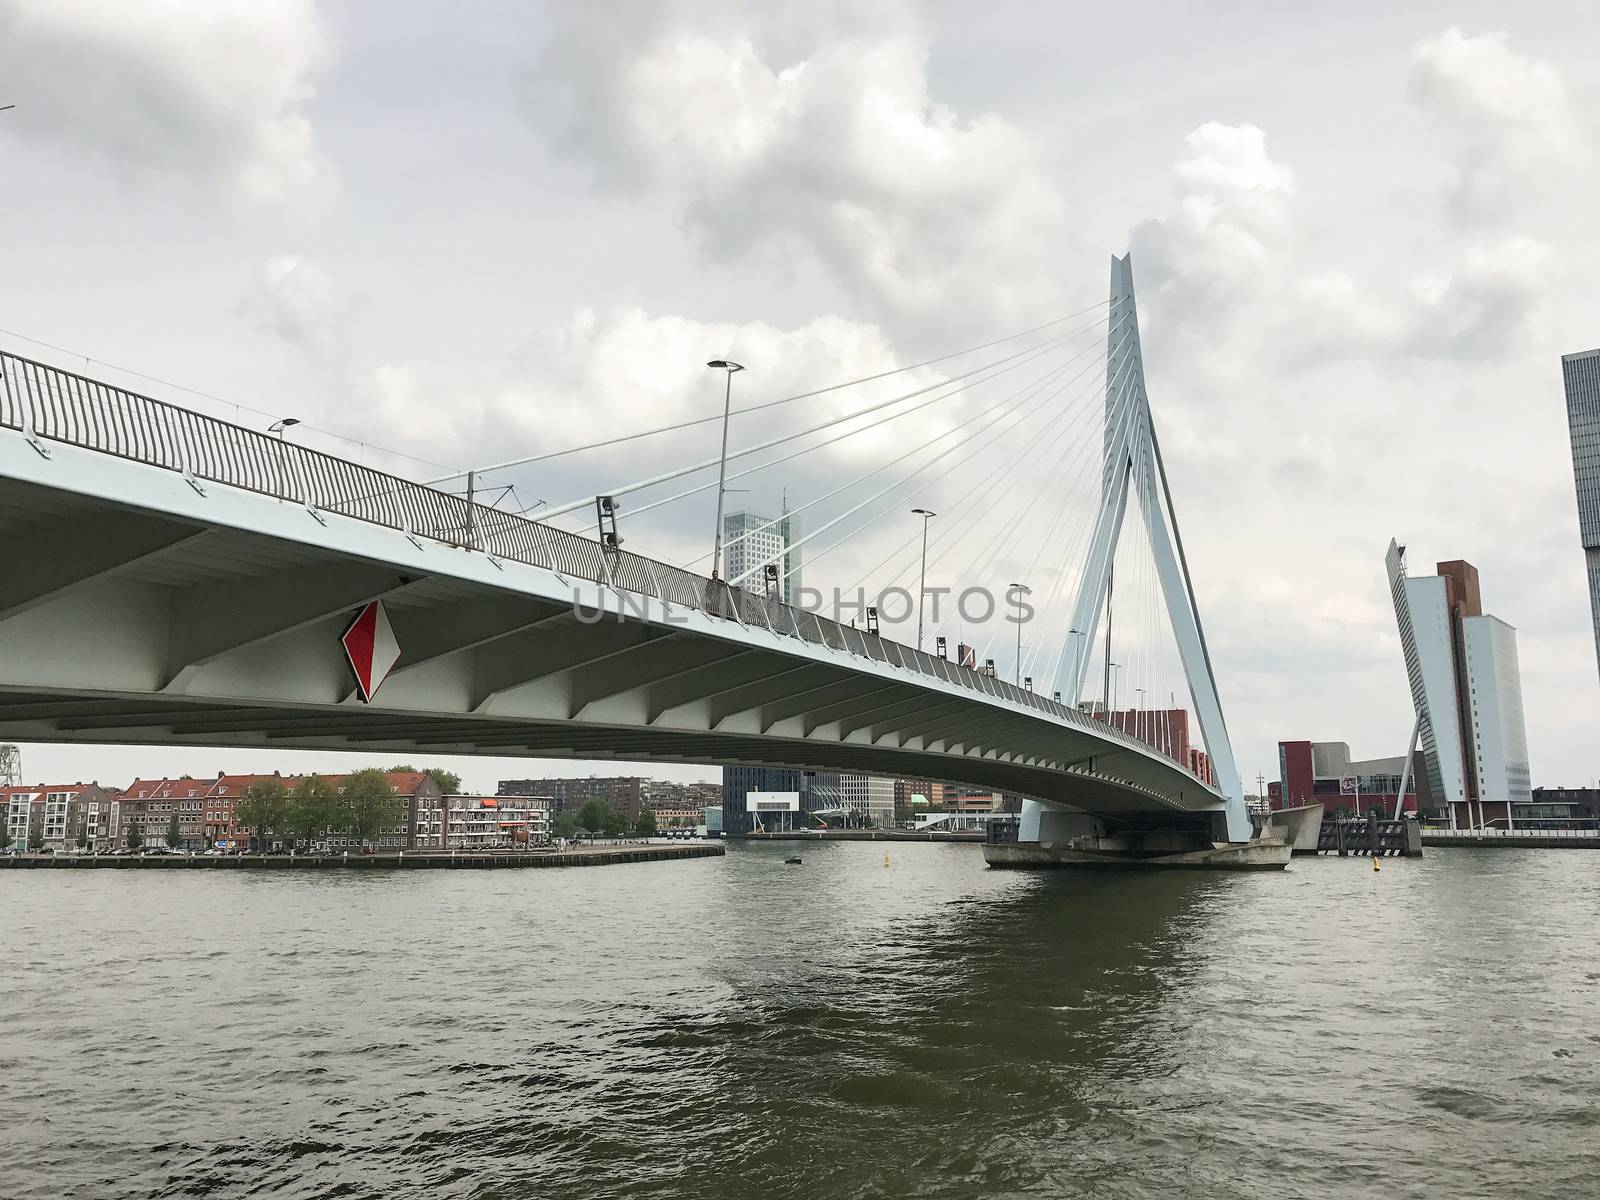 The Rotterdam Skyline with the Erasmusbrug bridge, Netherlands.